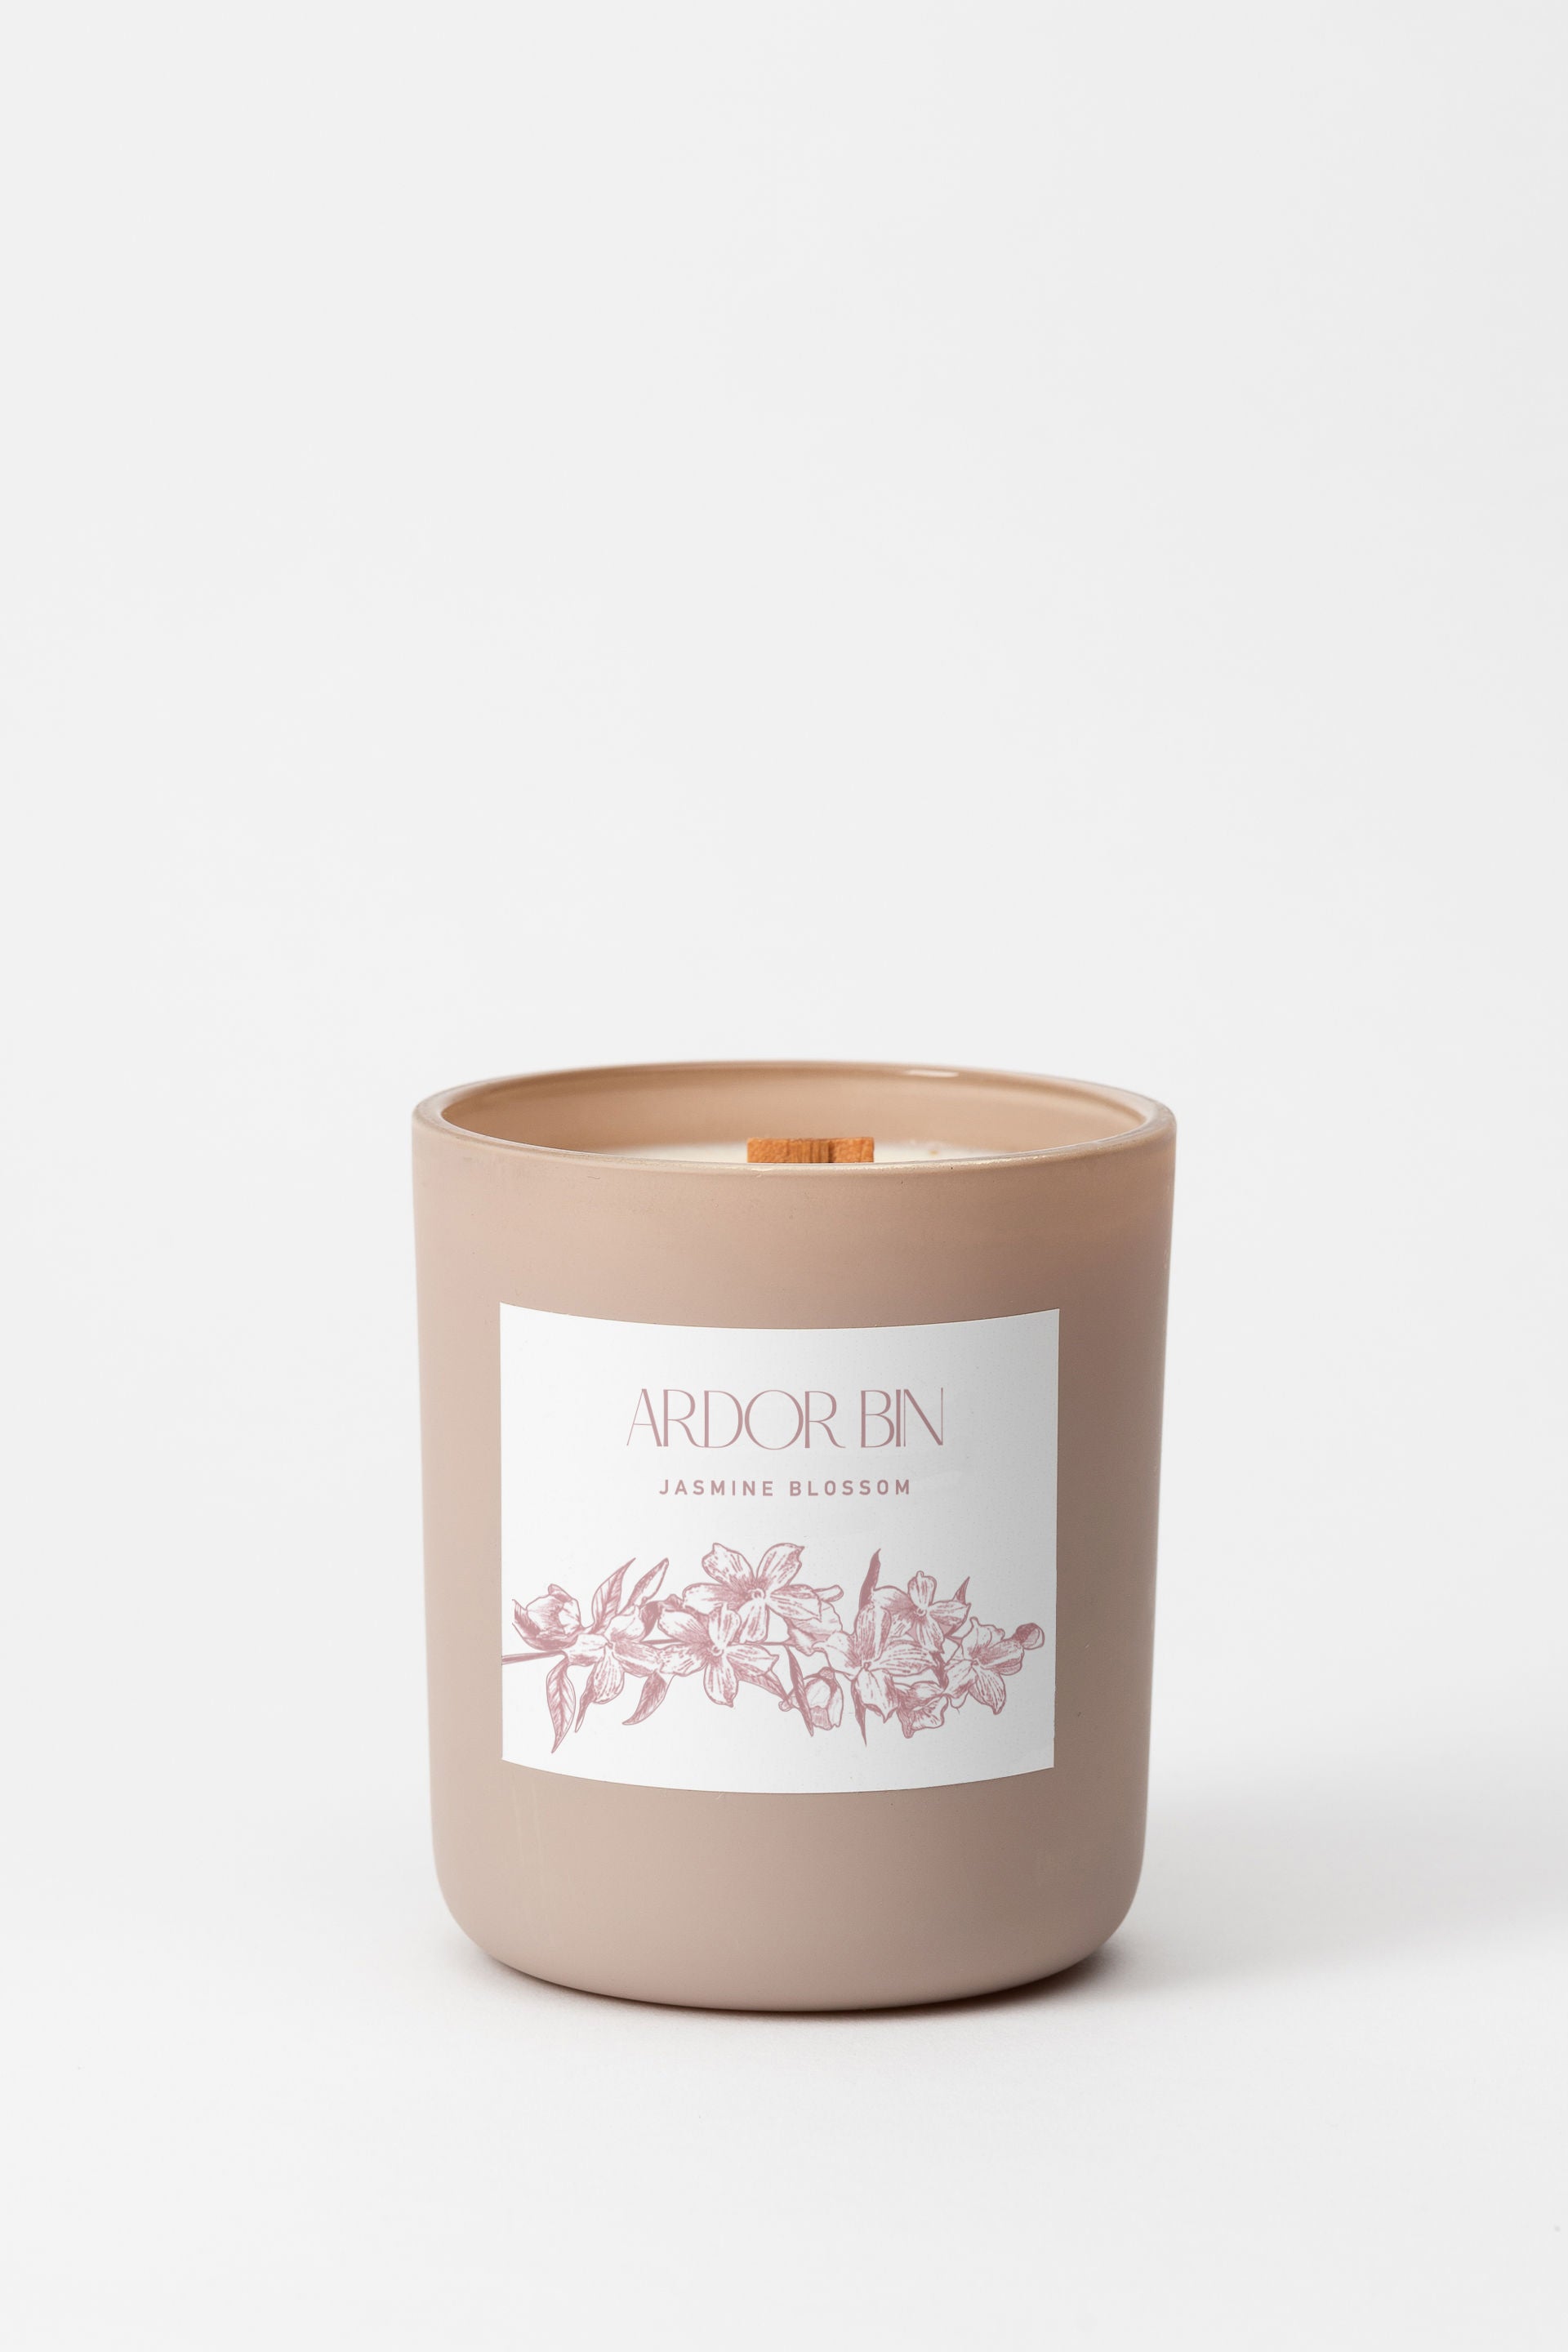 "Jasmine Blossom" Wood Wick Botanical Candle - Ardor Bin 